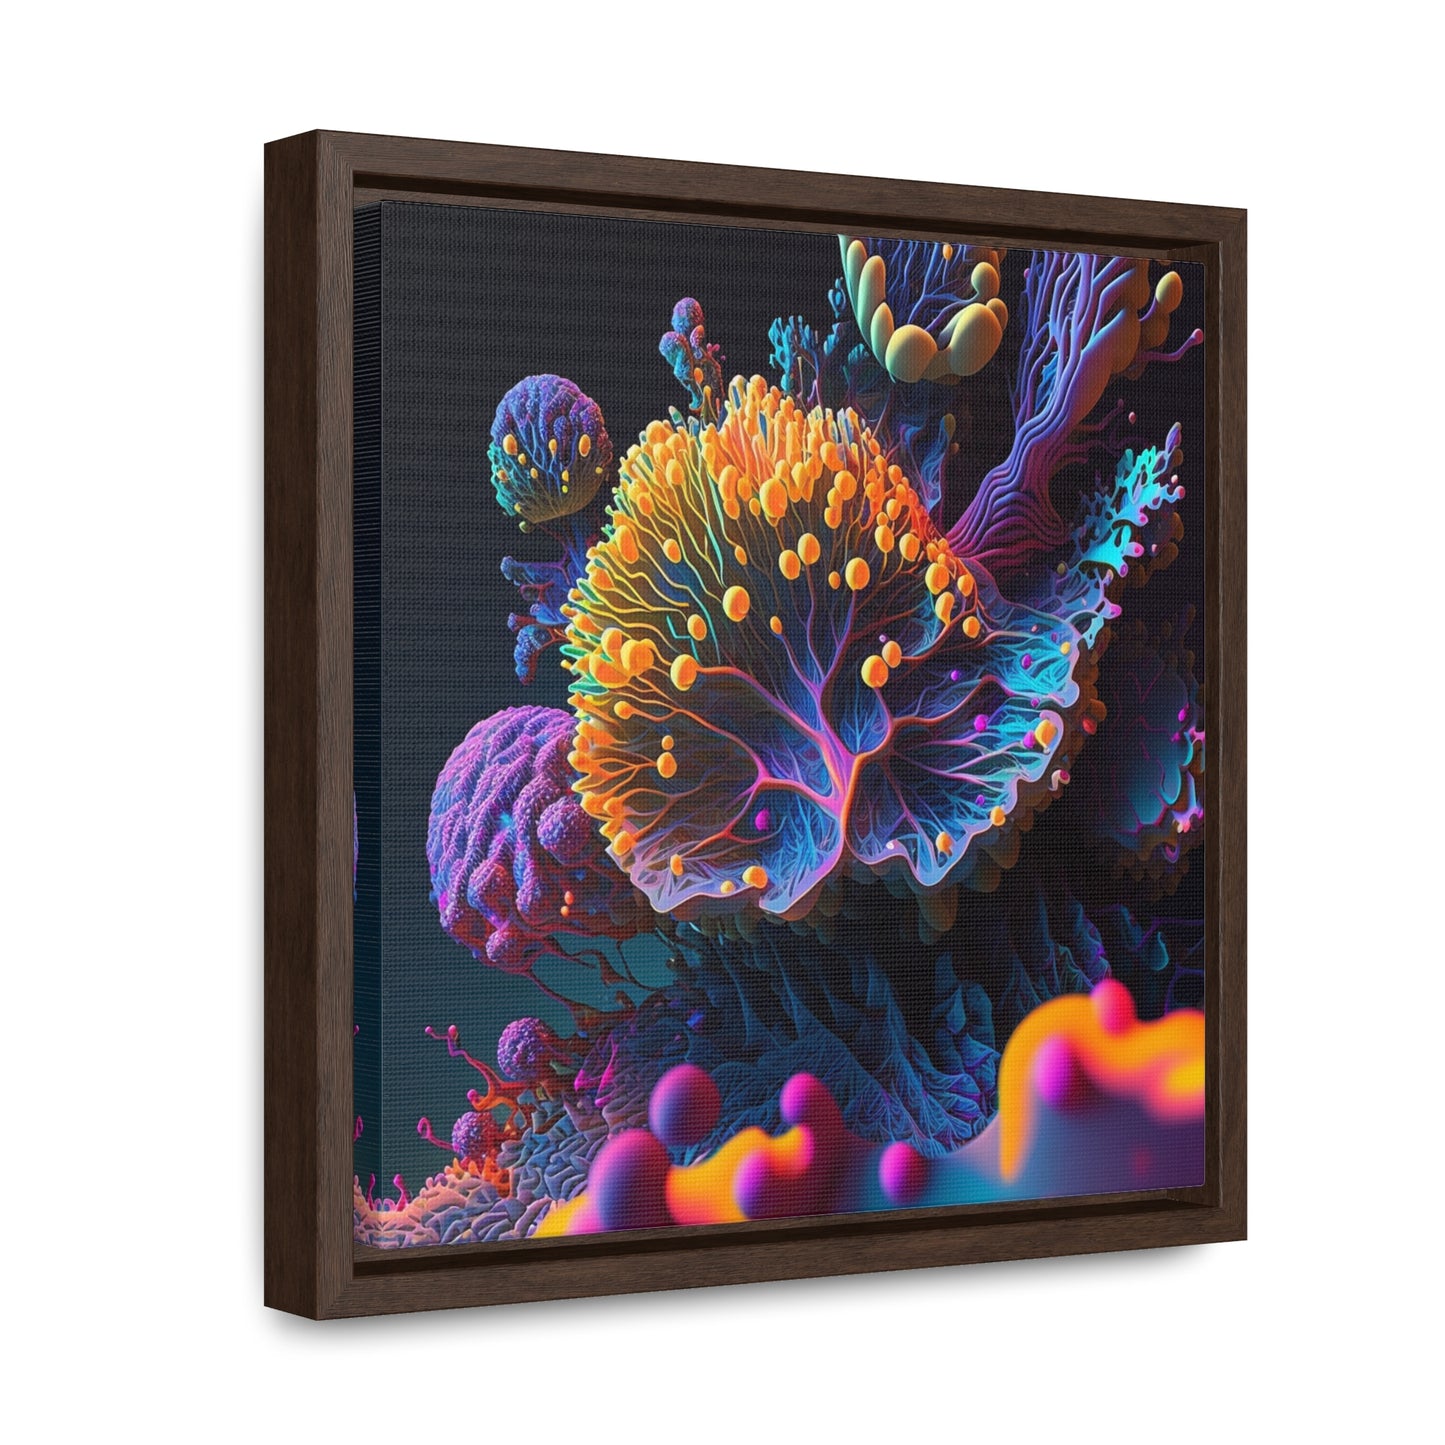 Gallery Canvas Wraps, Square Frame Ocean Life Macro 1